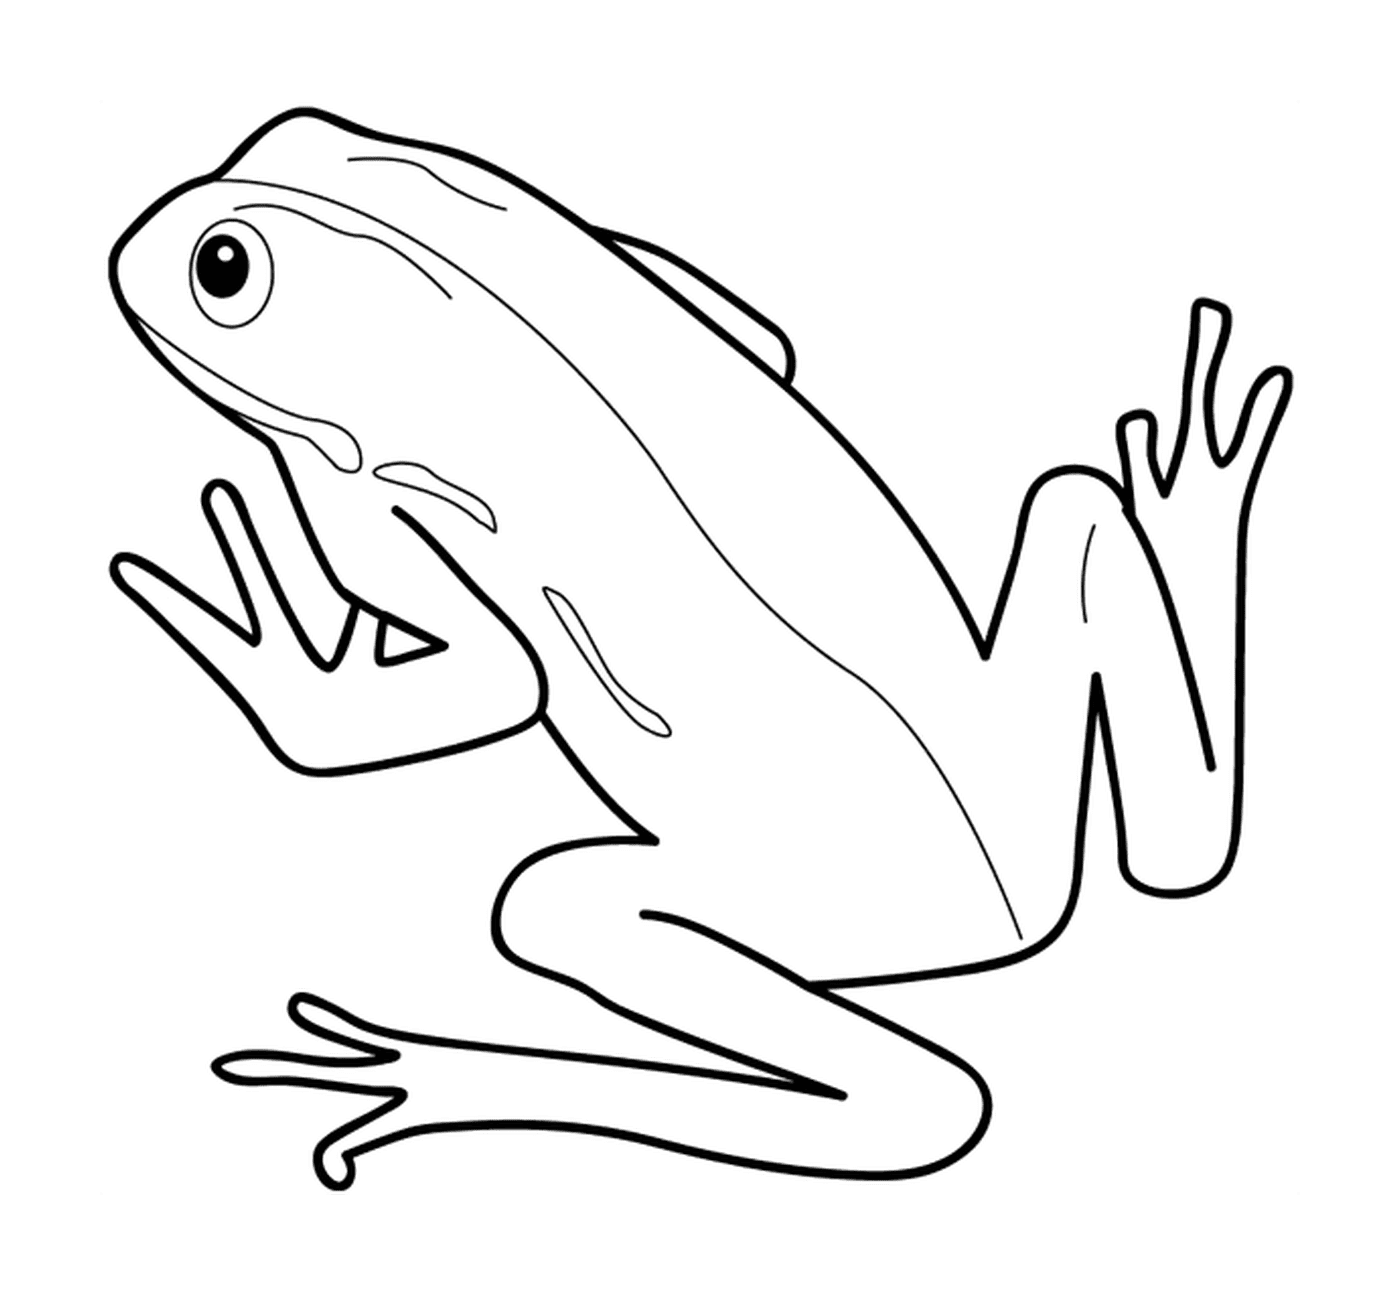 coloriage dessin animaux grenouille